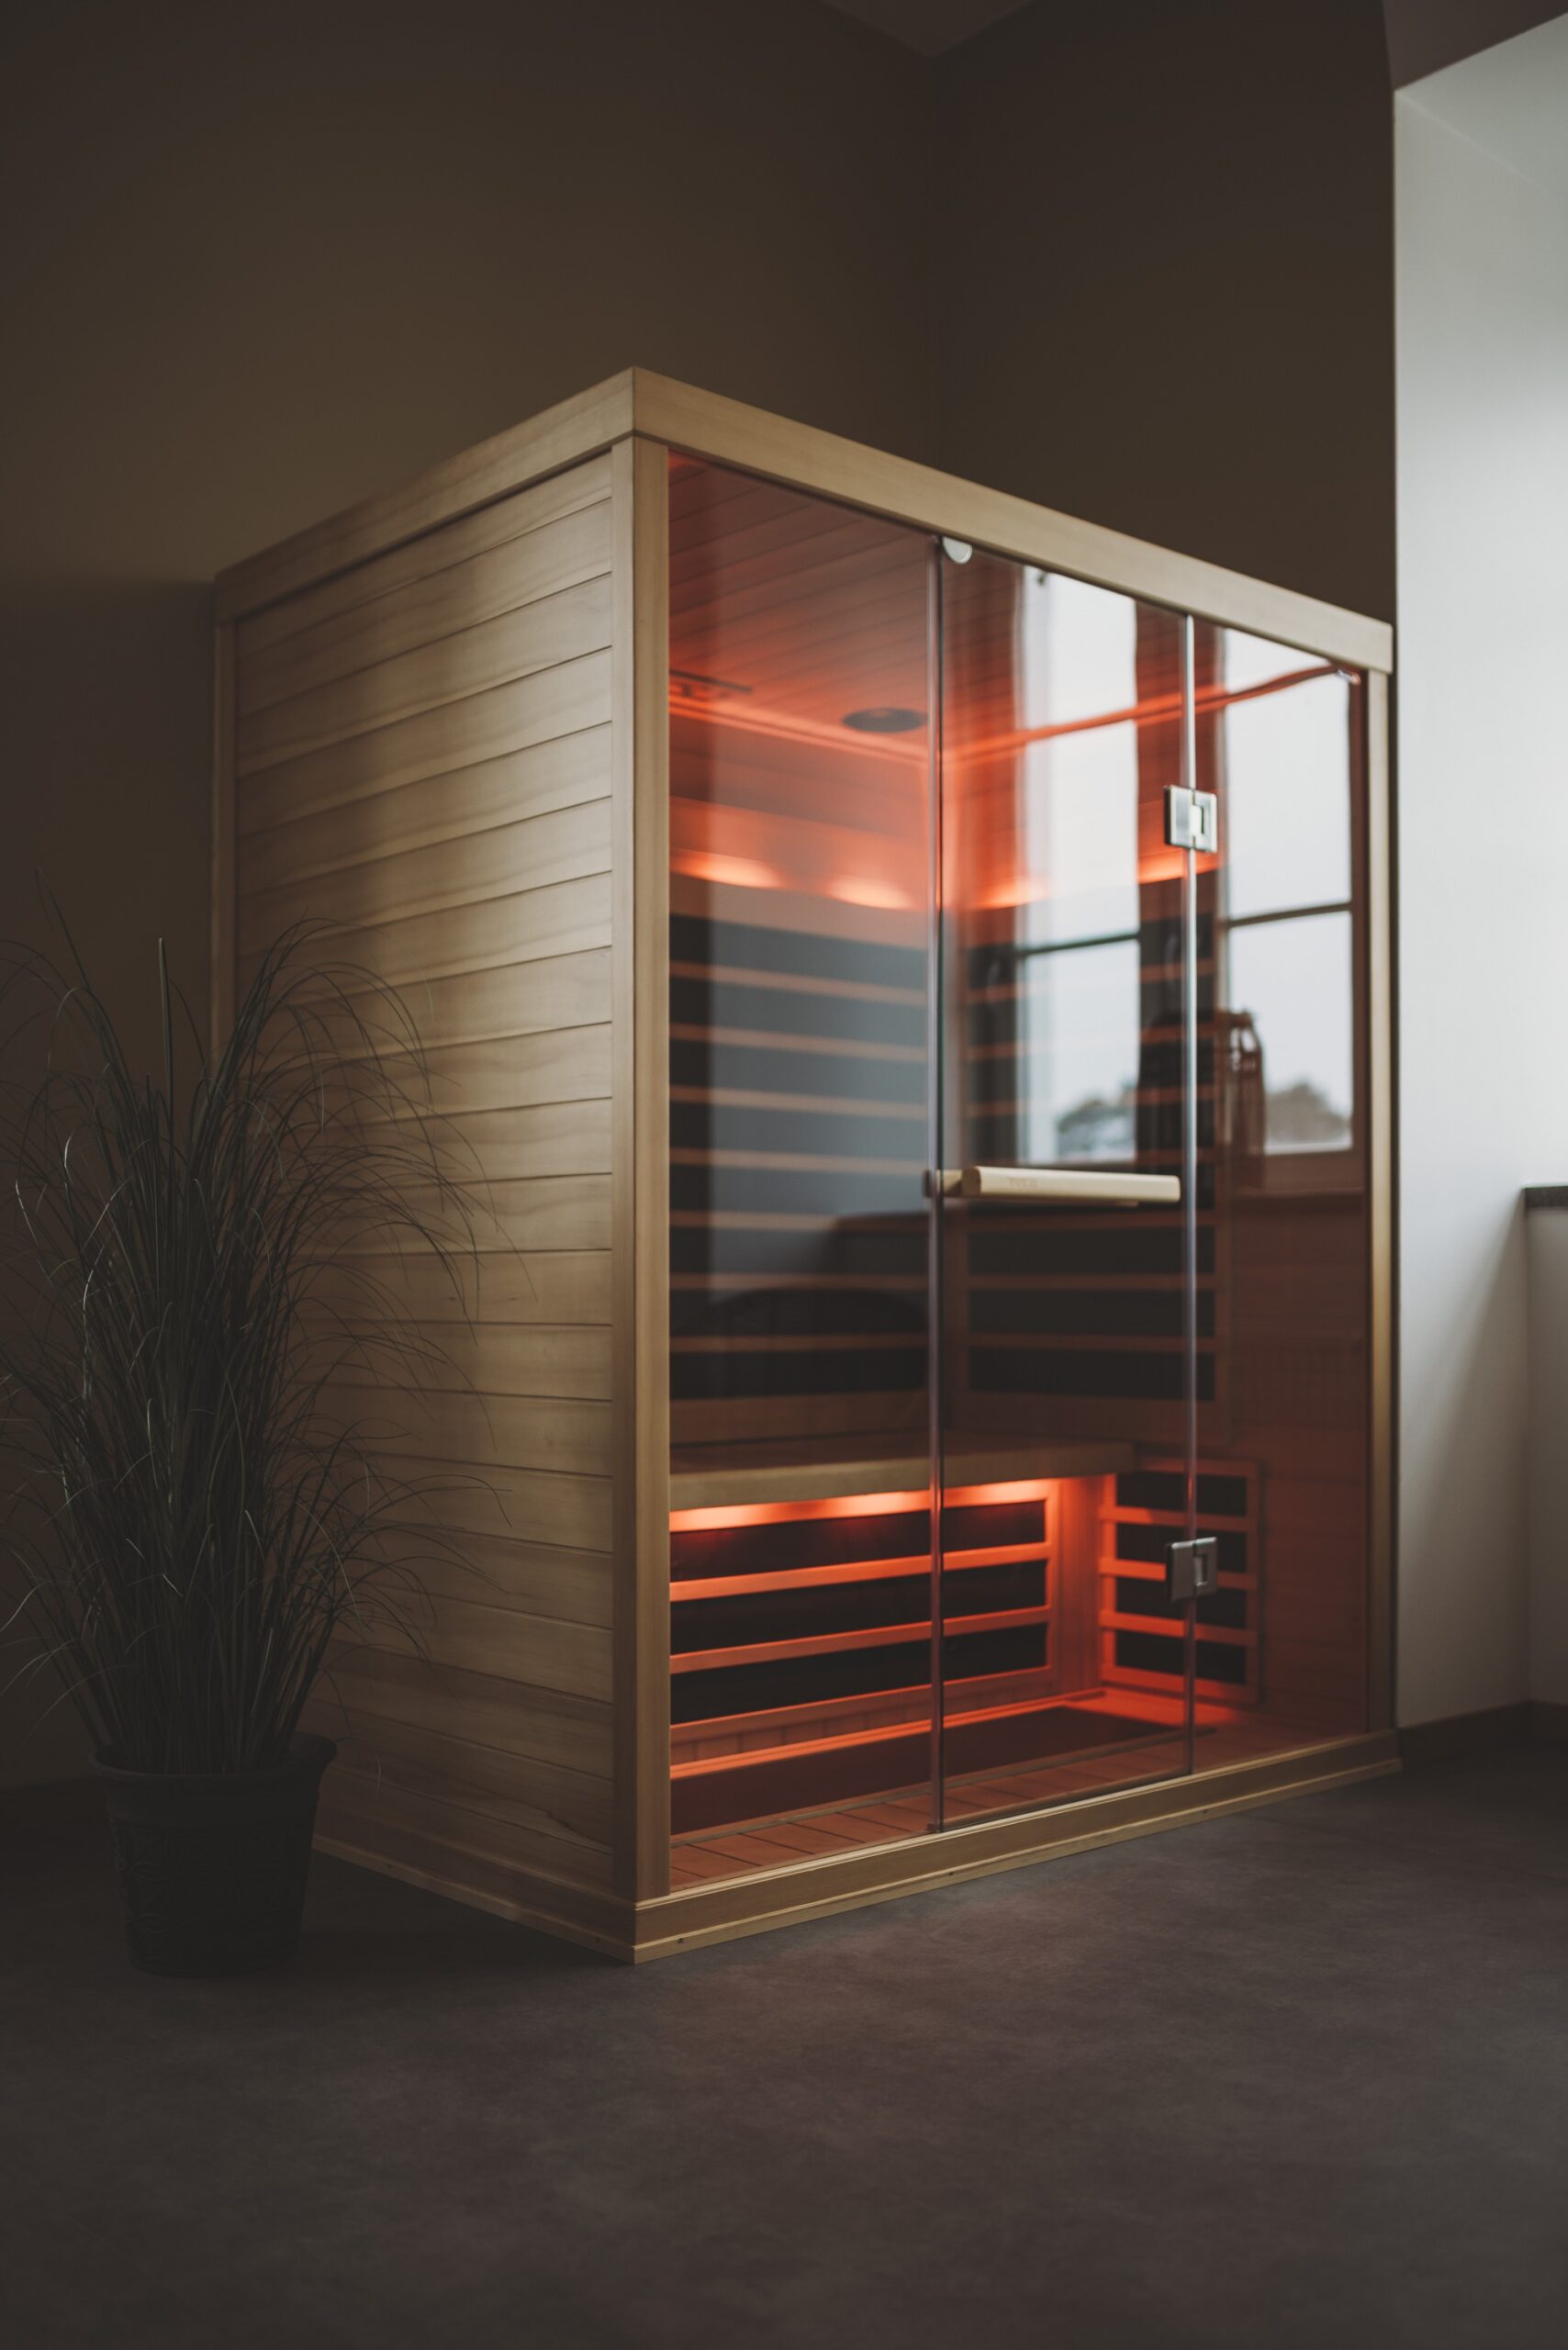 sauna ad infrarossi